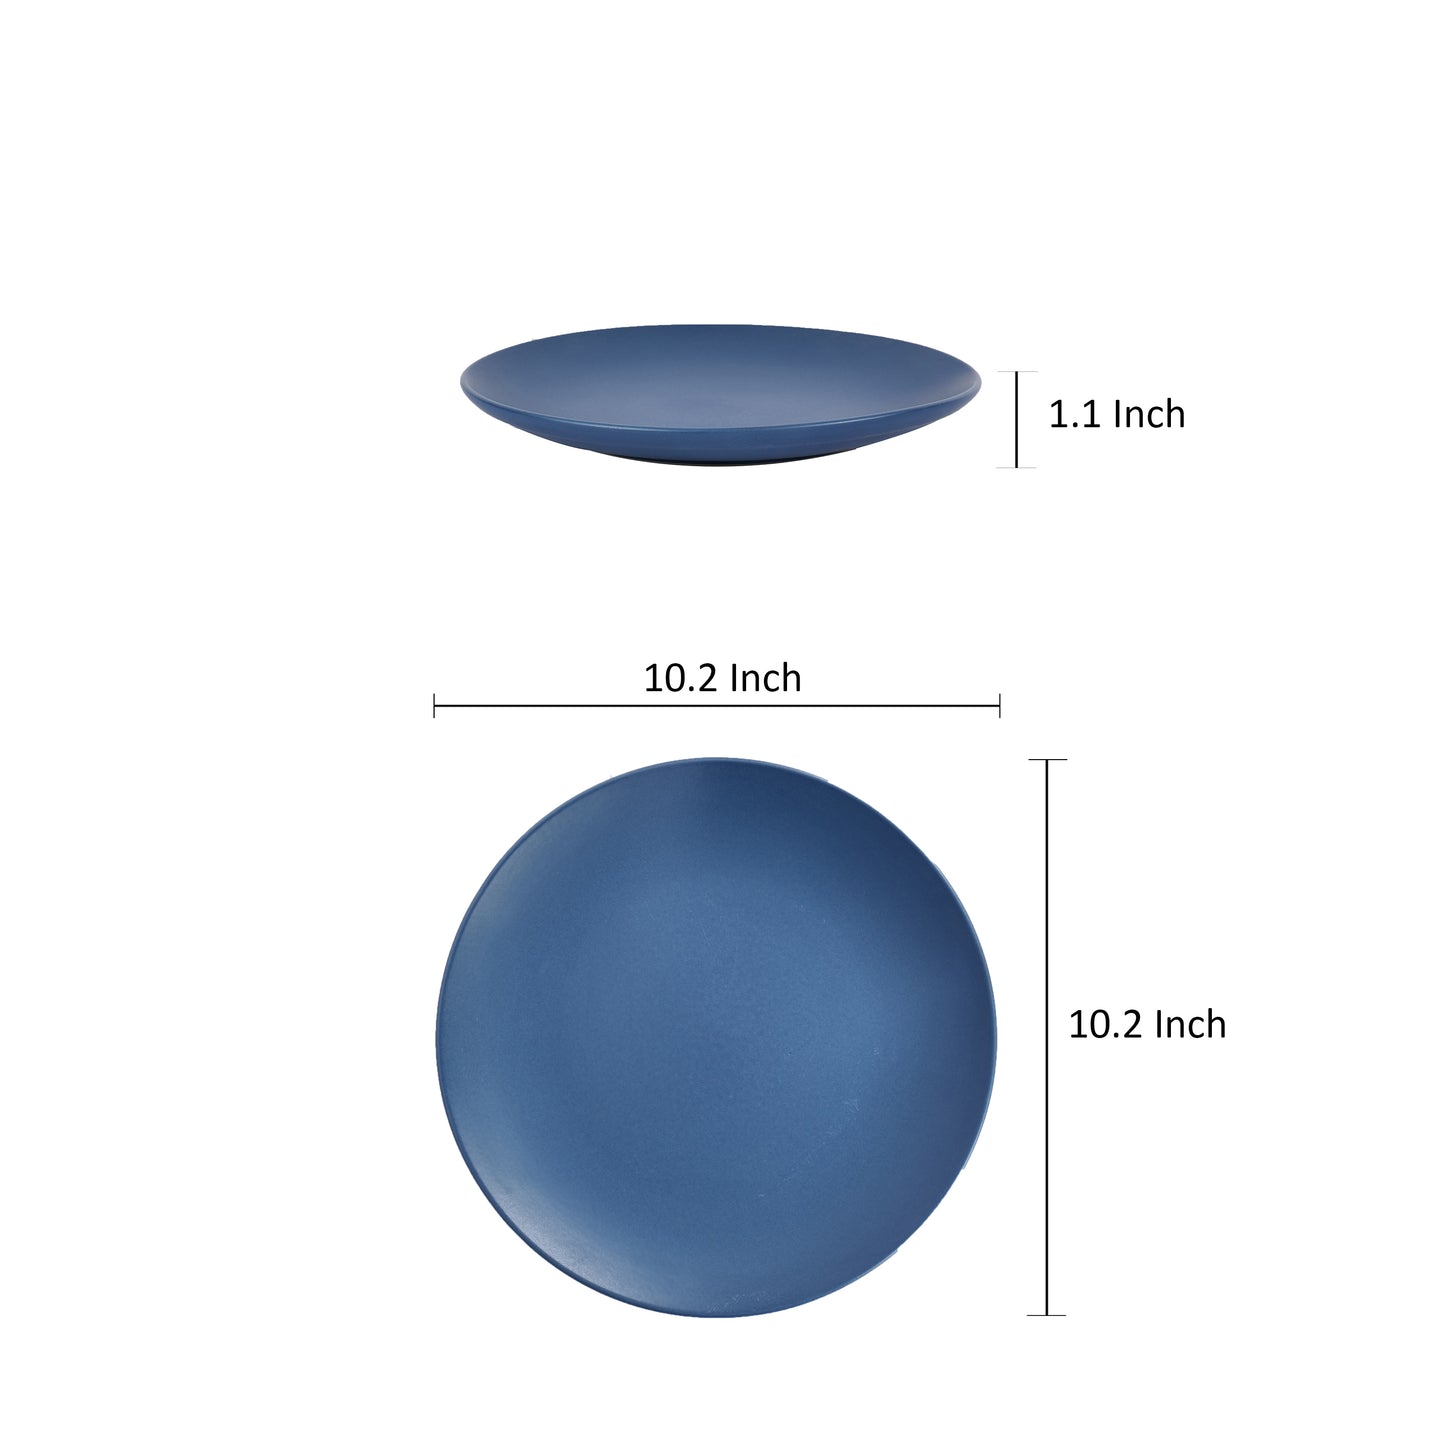 'Pastel Blue' Studio Pottery Ceramic Dinner Plates In Matt Blue, 10.2 inch